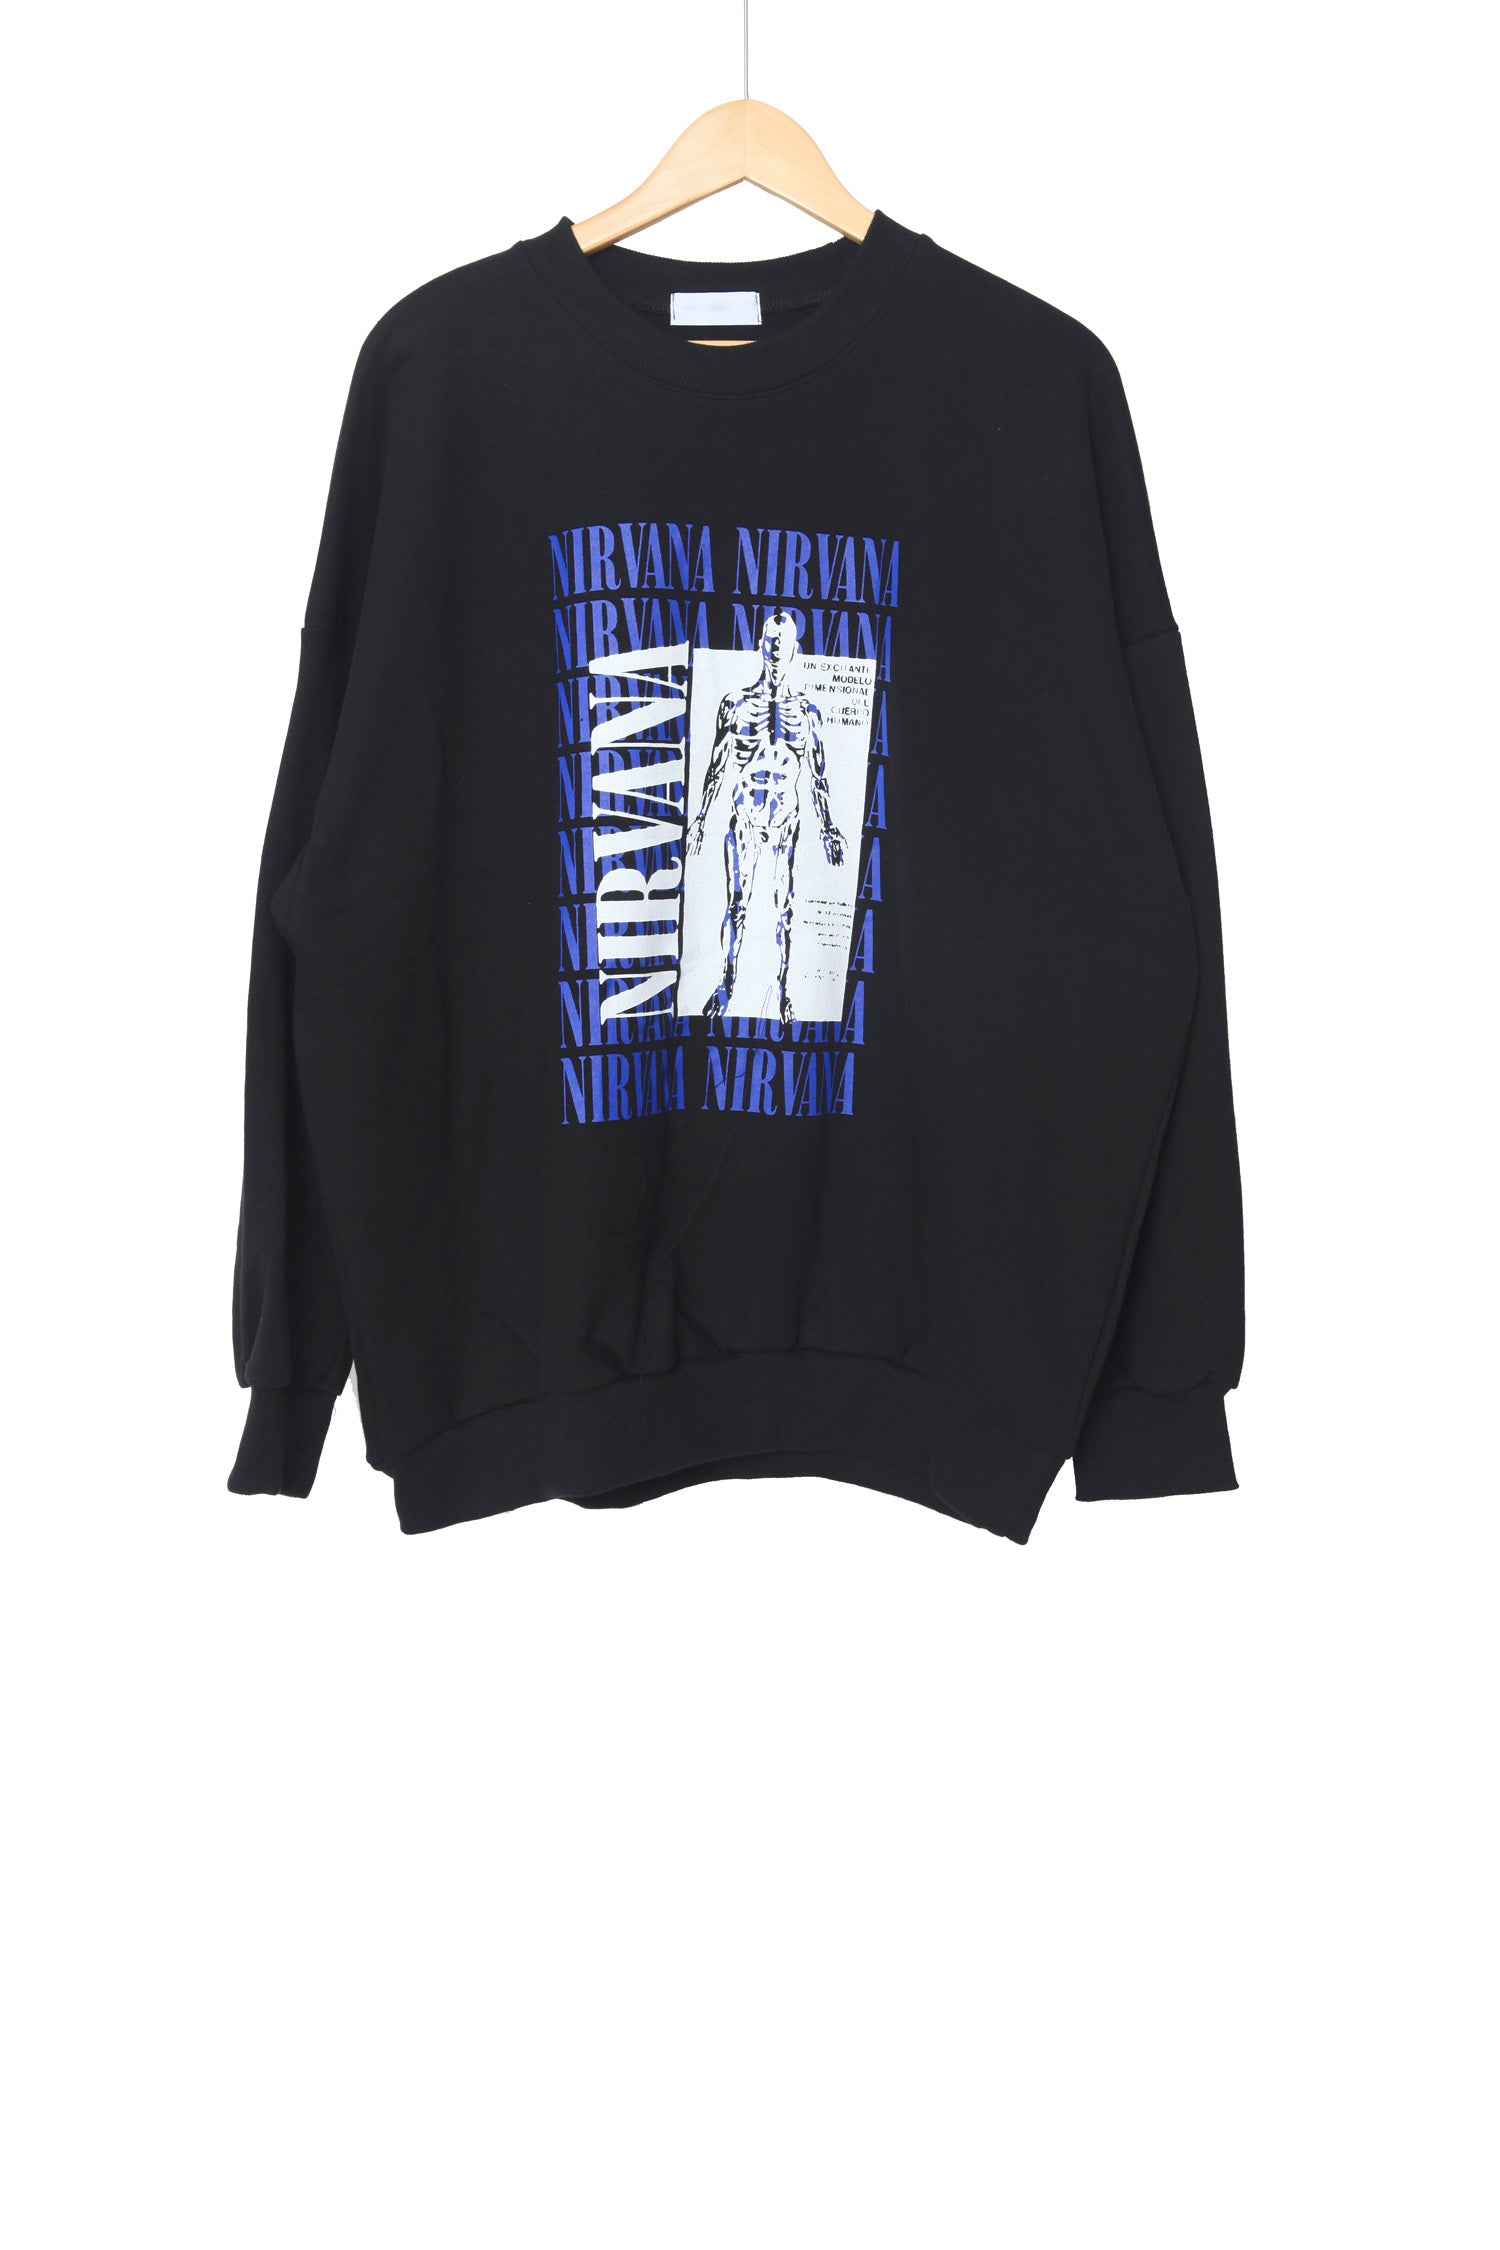 Nirvana Humano Sweatshirt